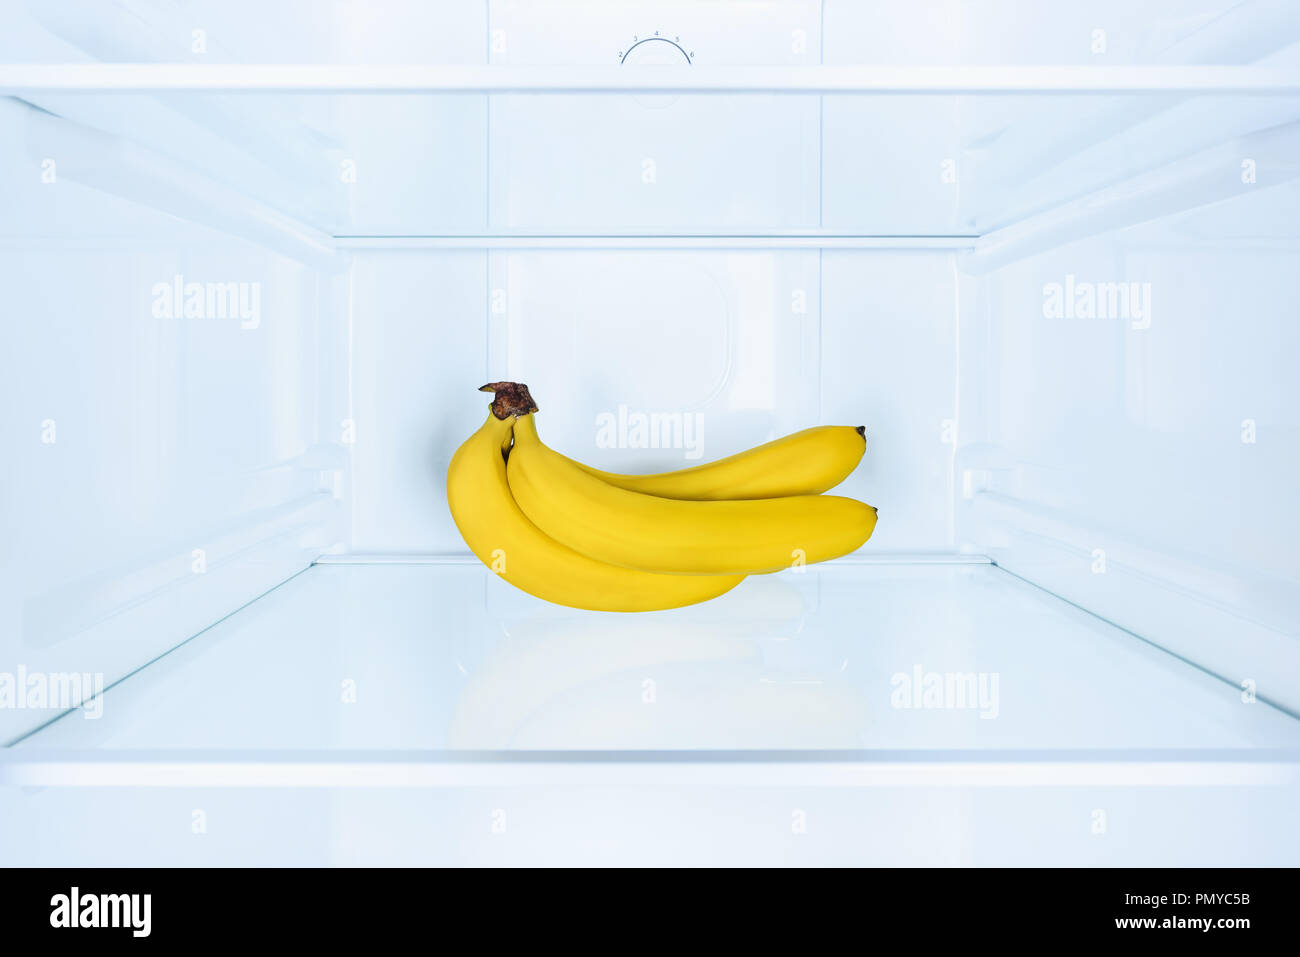 There are bananas in the fridge. Бананы на полке. Бананы на полках. Бананы в холодильнике. Банан в холодильнике картинка.